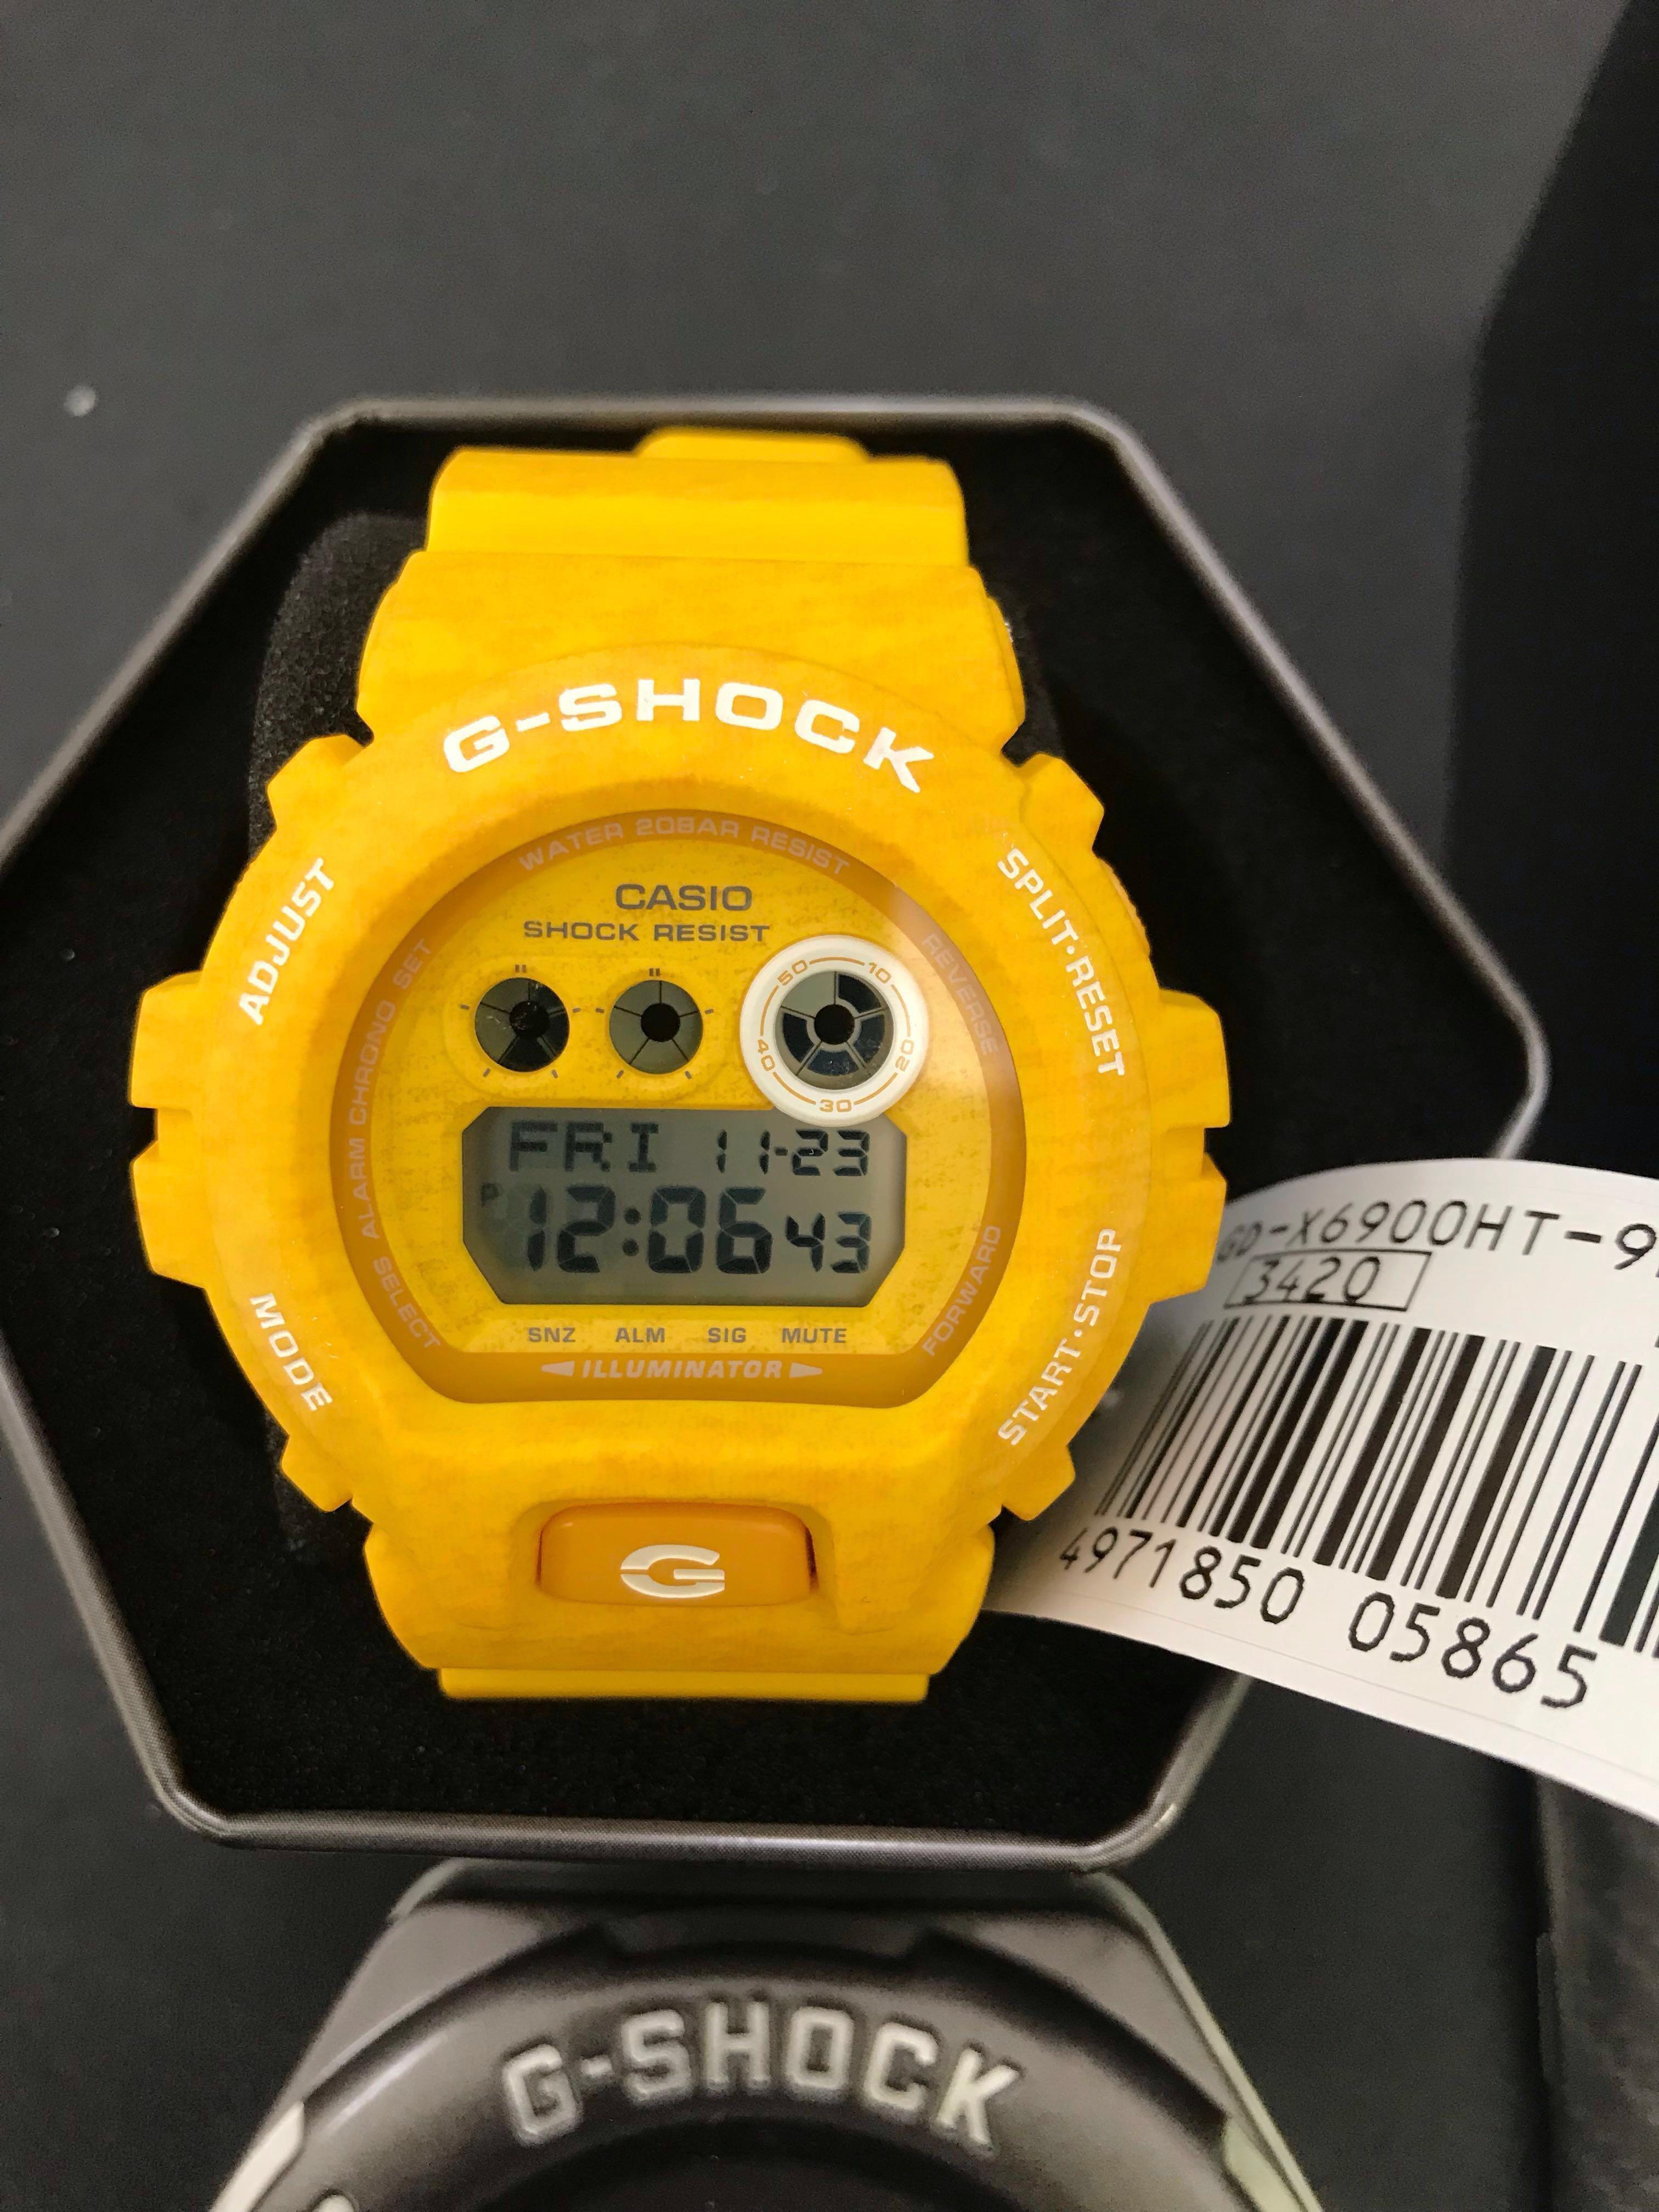 G-SHOCK GDX 6900 HT-9 YELLOW CUN, Men's Fashion, Watches ...